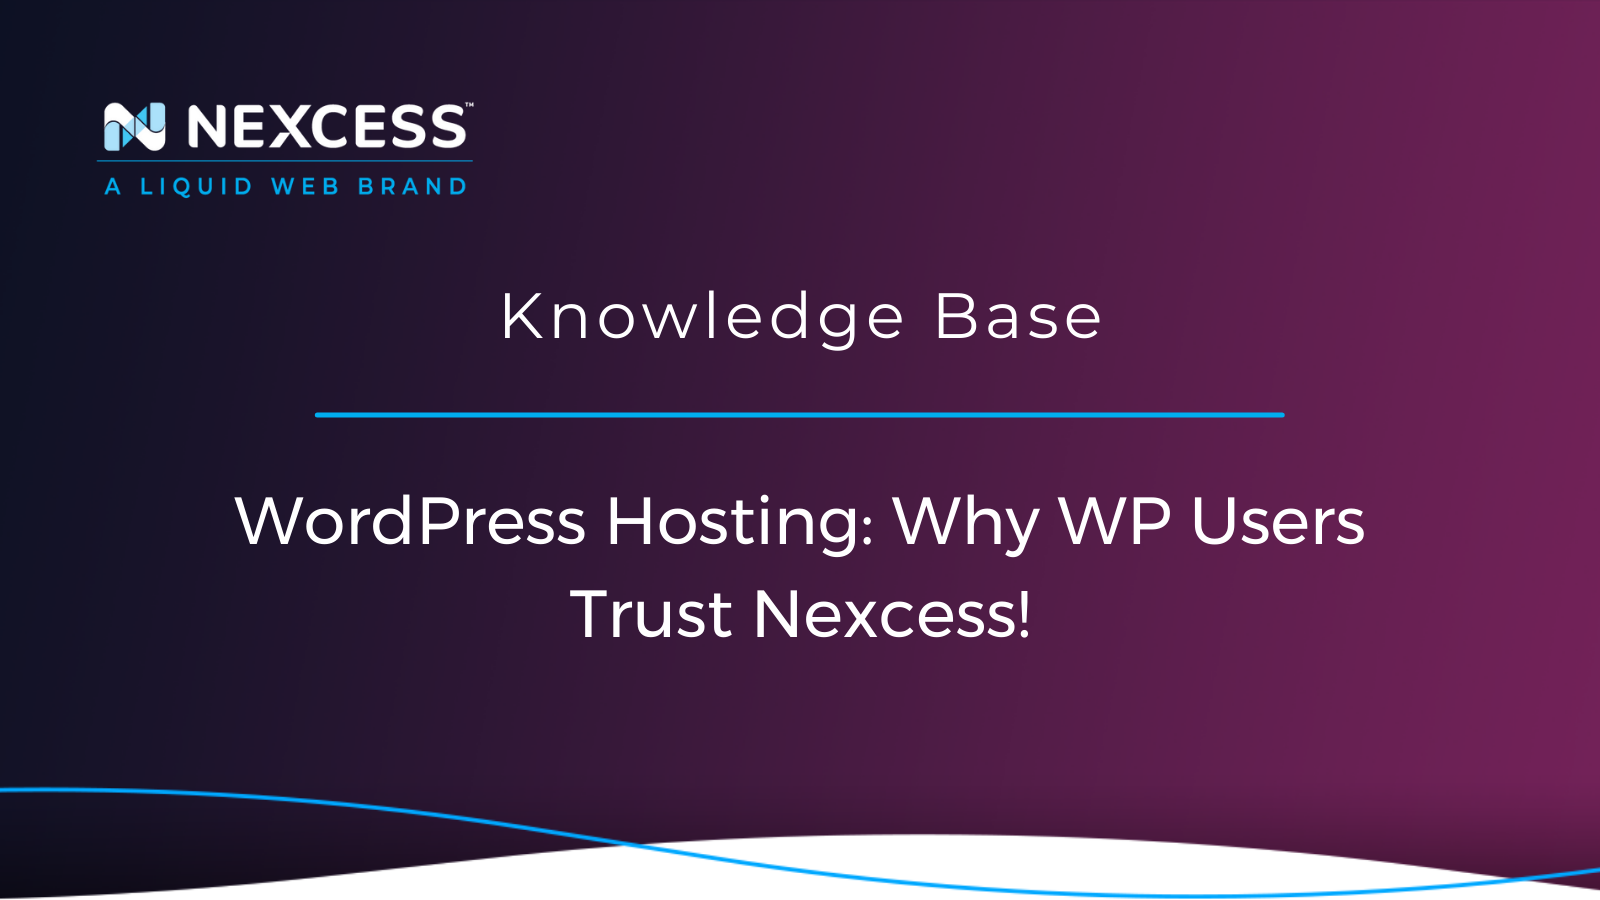 WordPress Hosting: Why WP Users Trust Nexcess!